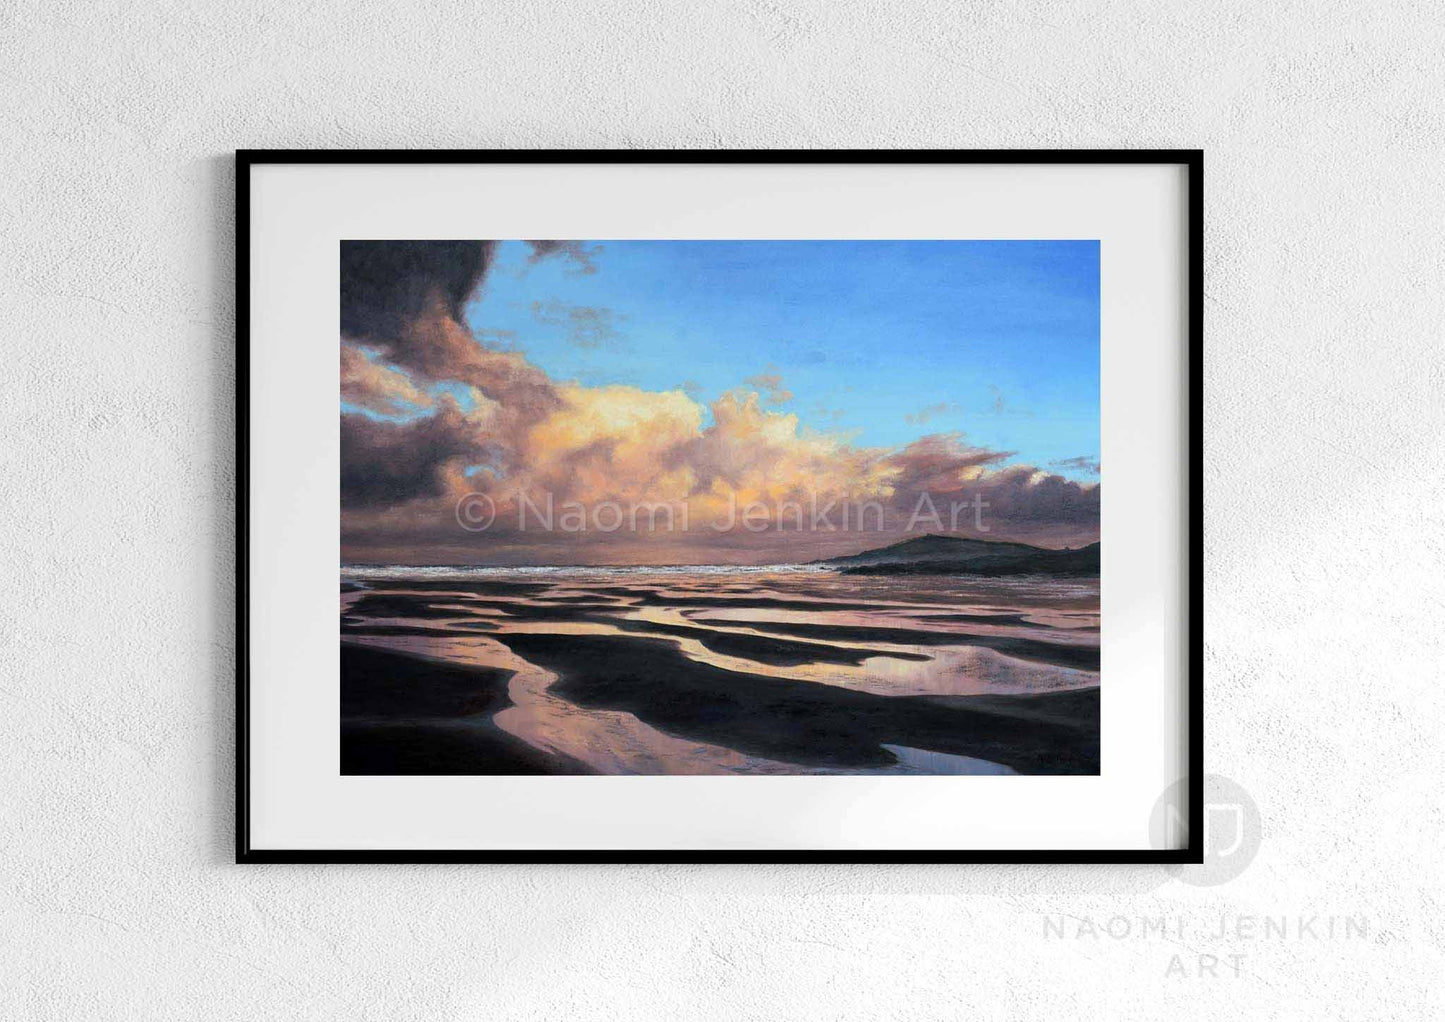 A New Day Dawns' seascape print by artist Naomi Jenkin Art in a black frame